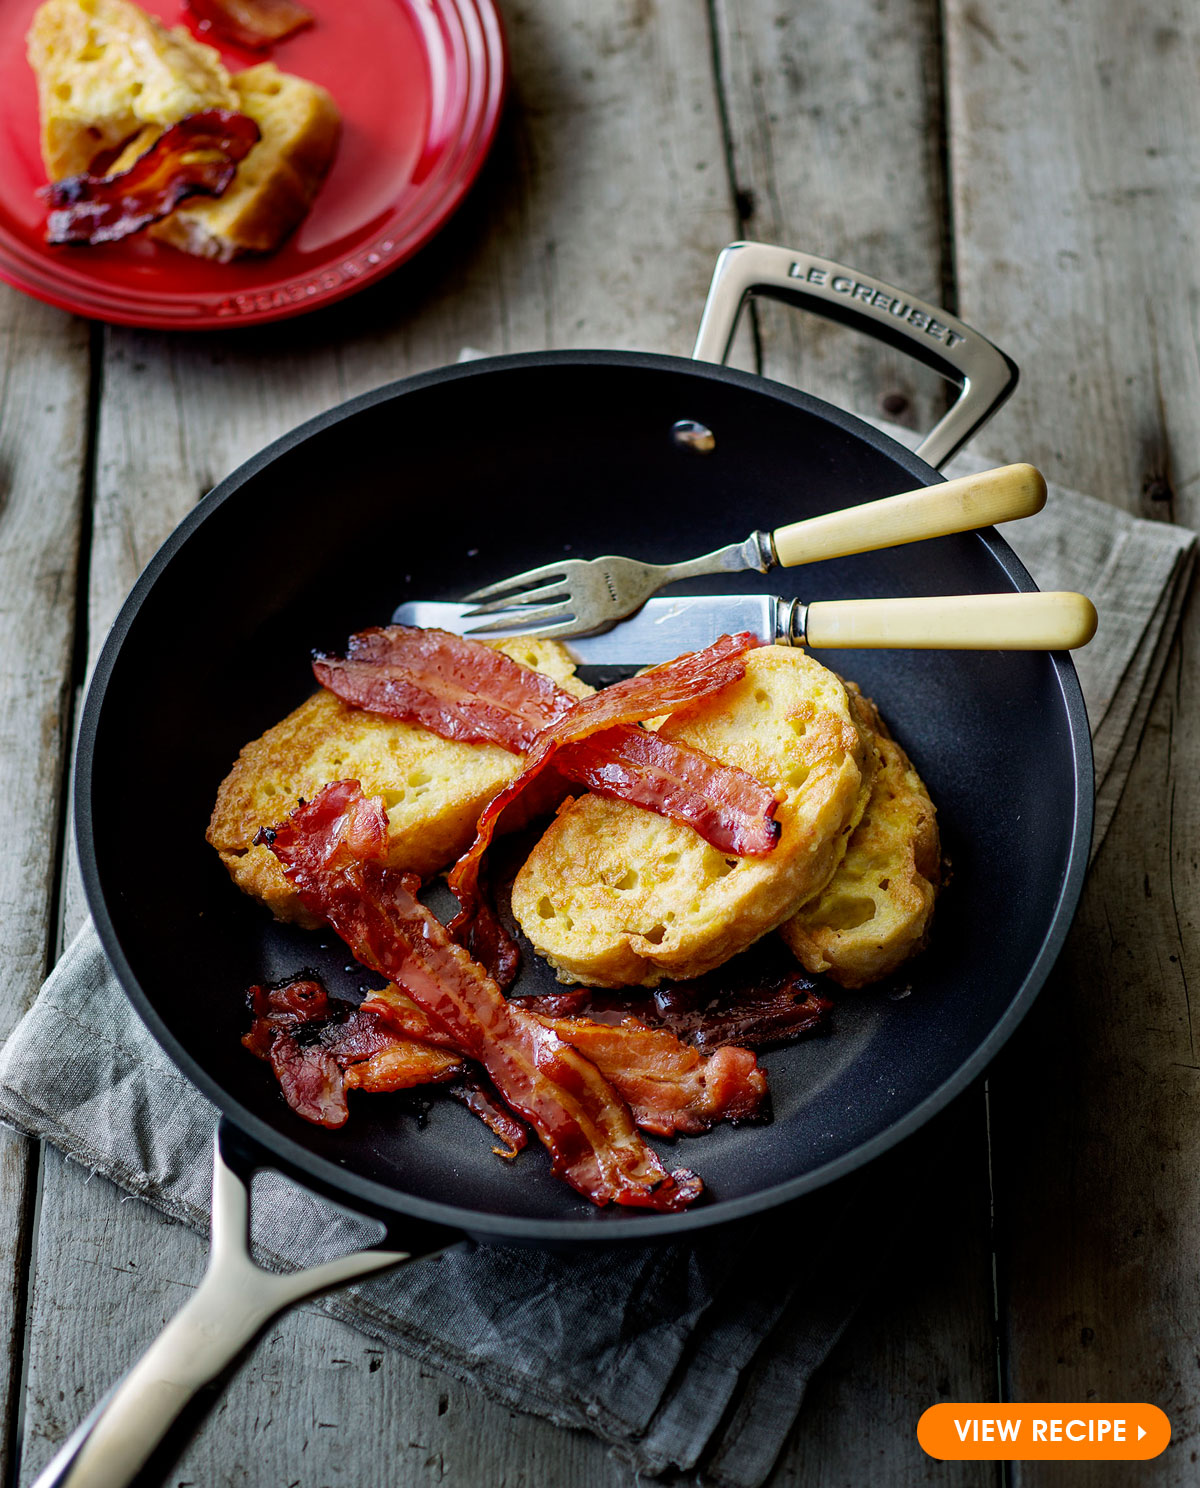 Maple glazed bacon and french toast